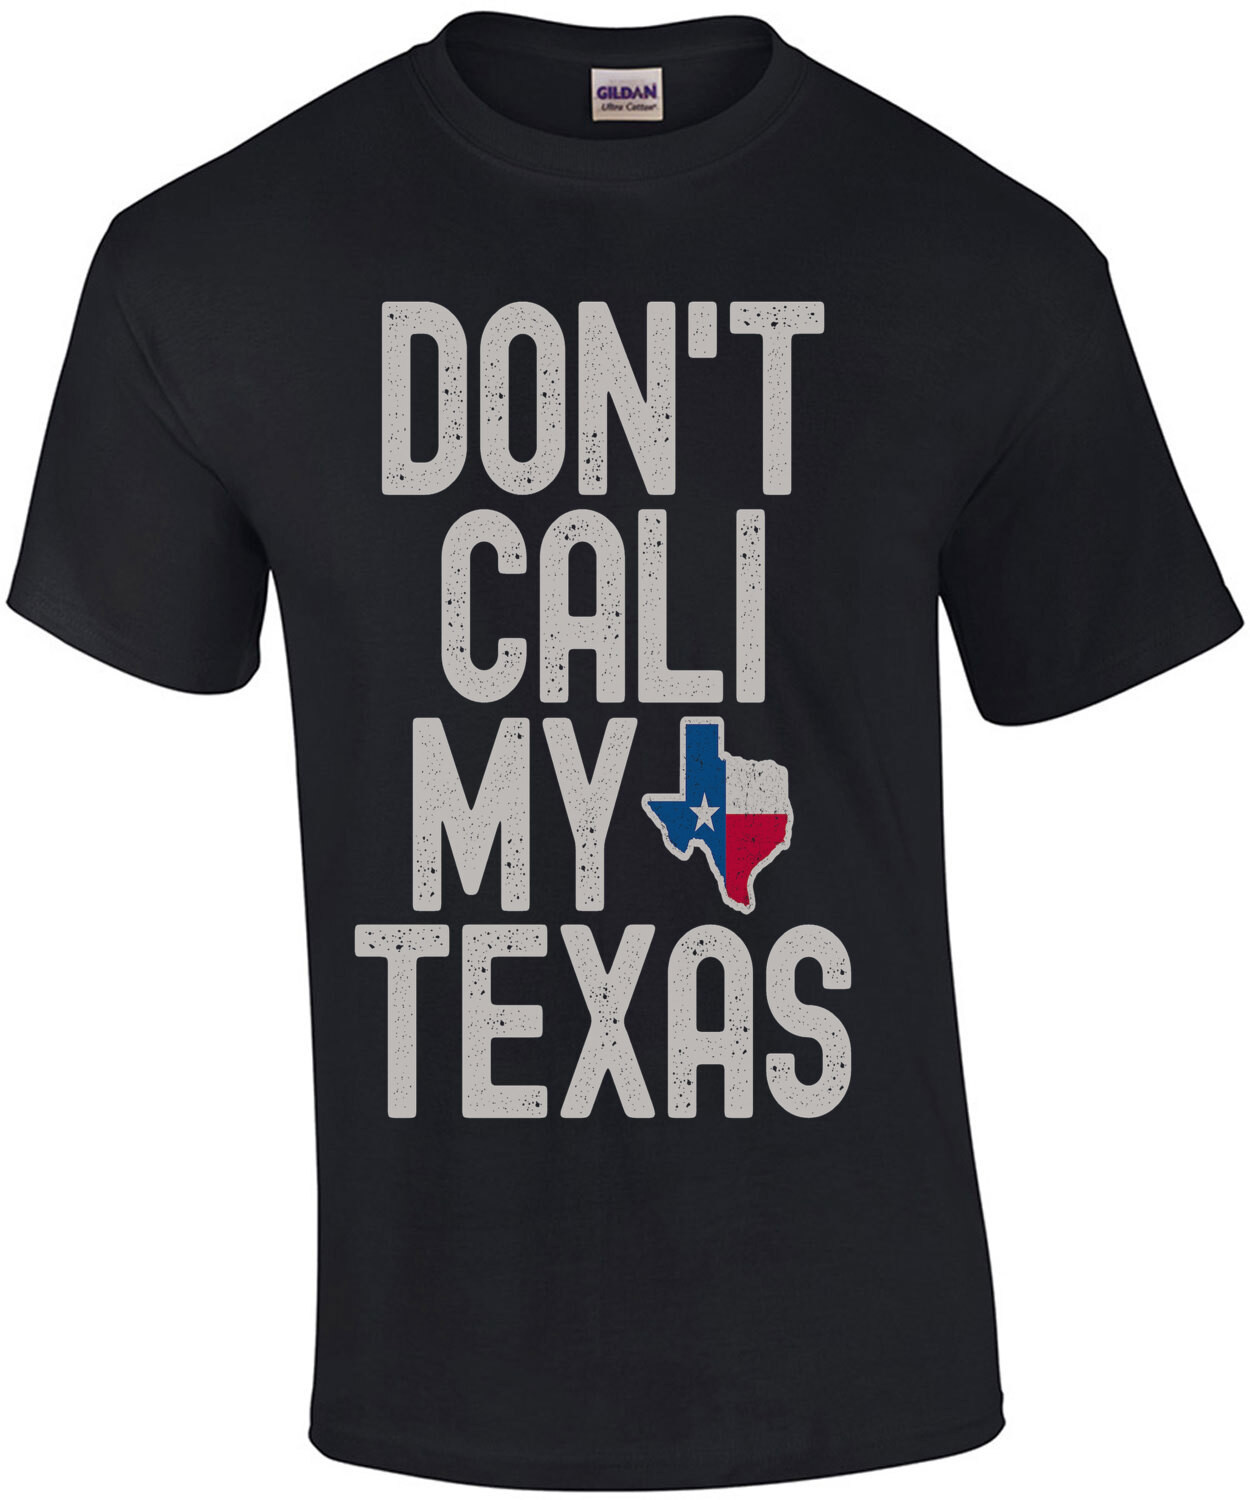 Don't Cali My Texas - Funny T-Shirt